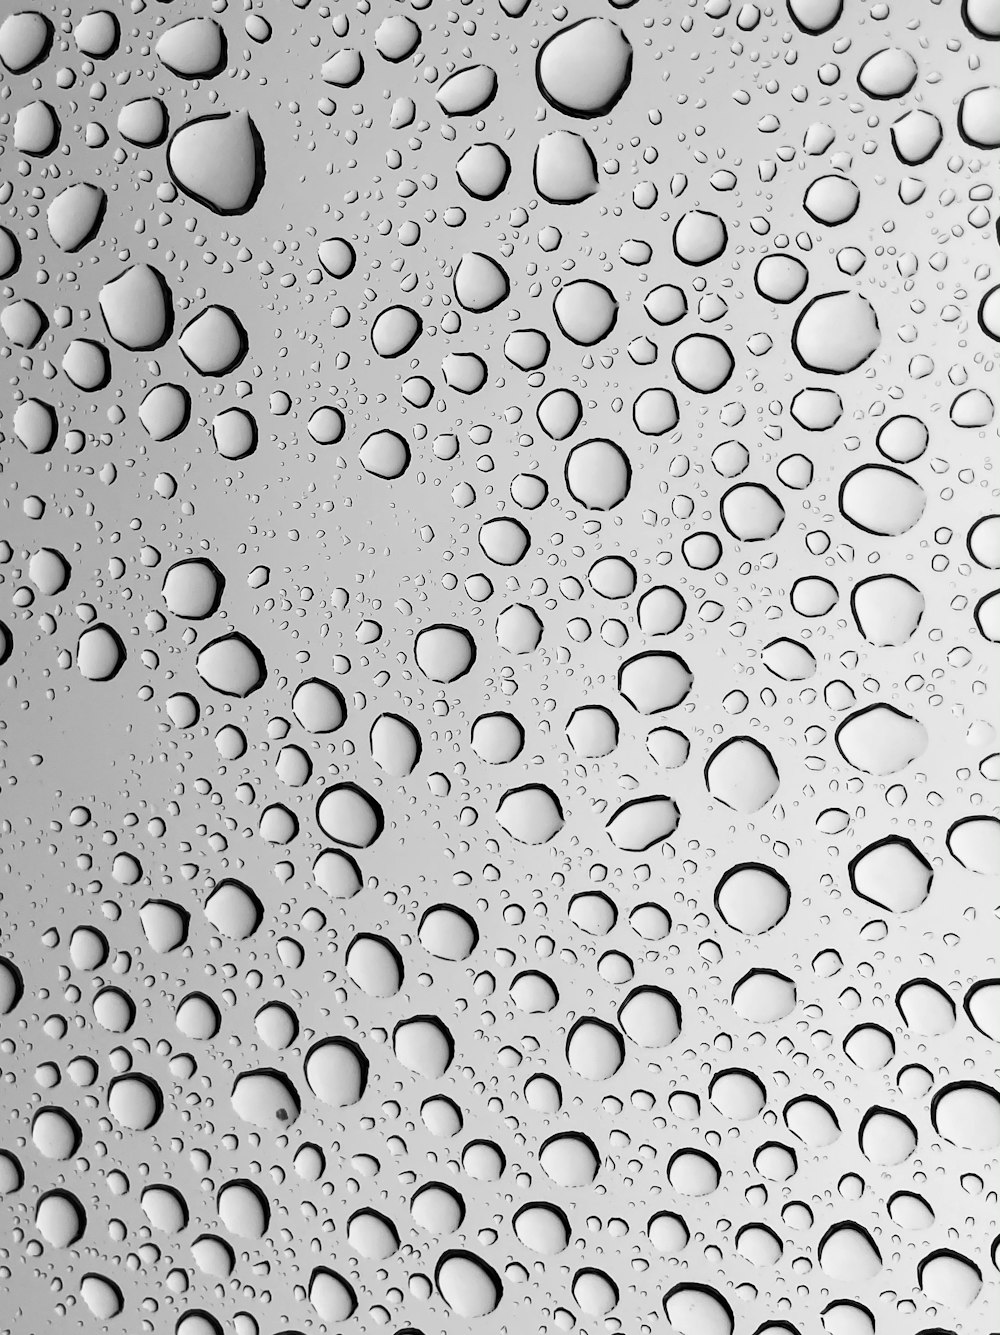 gotículas de água na superfície cinzenta